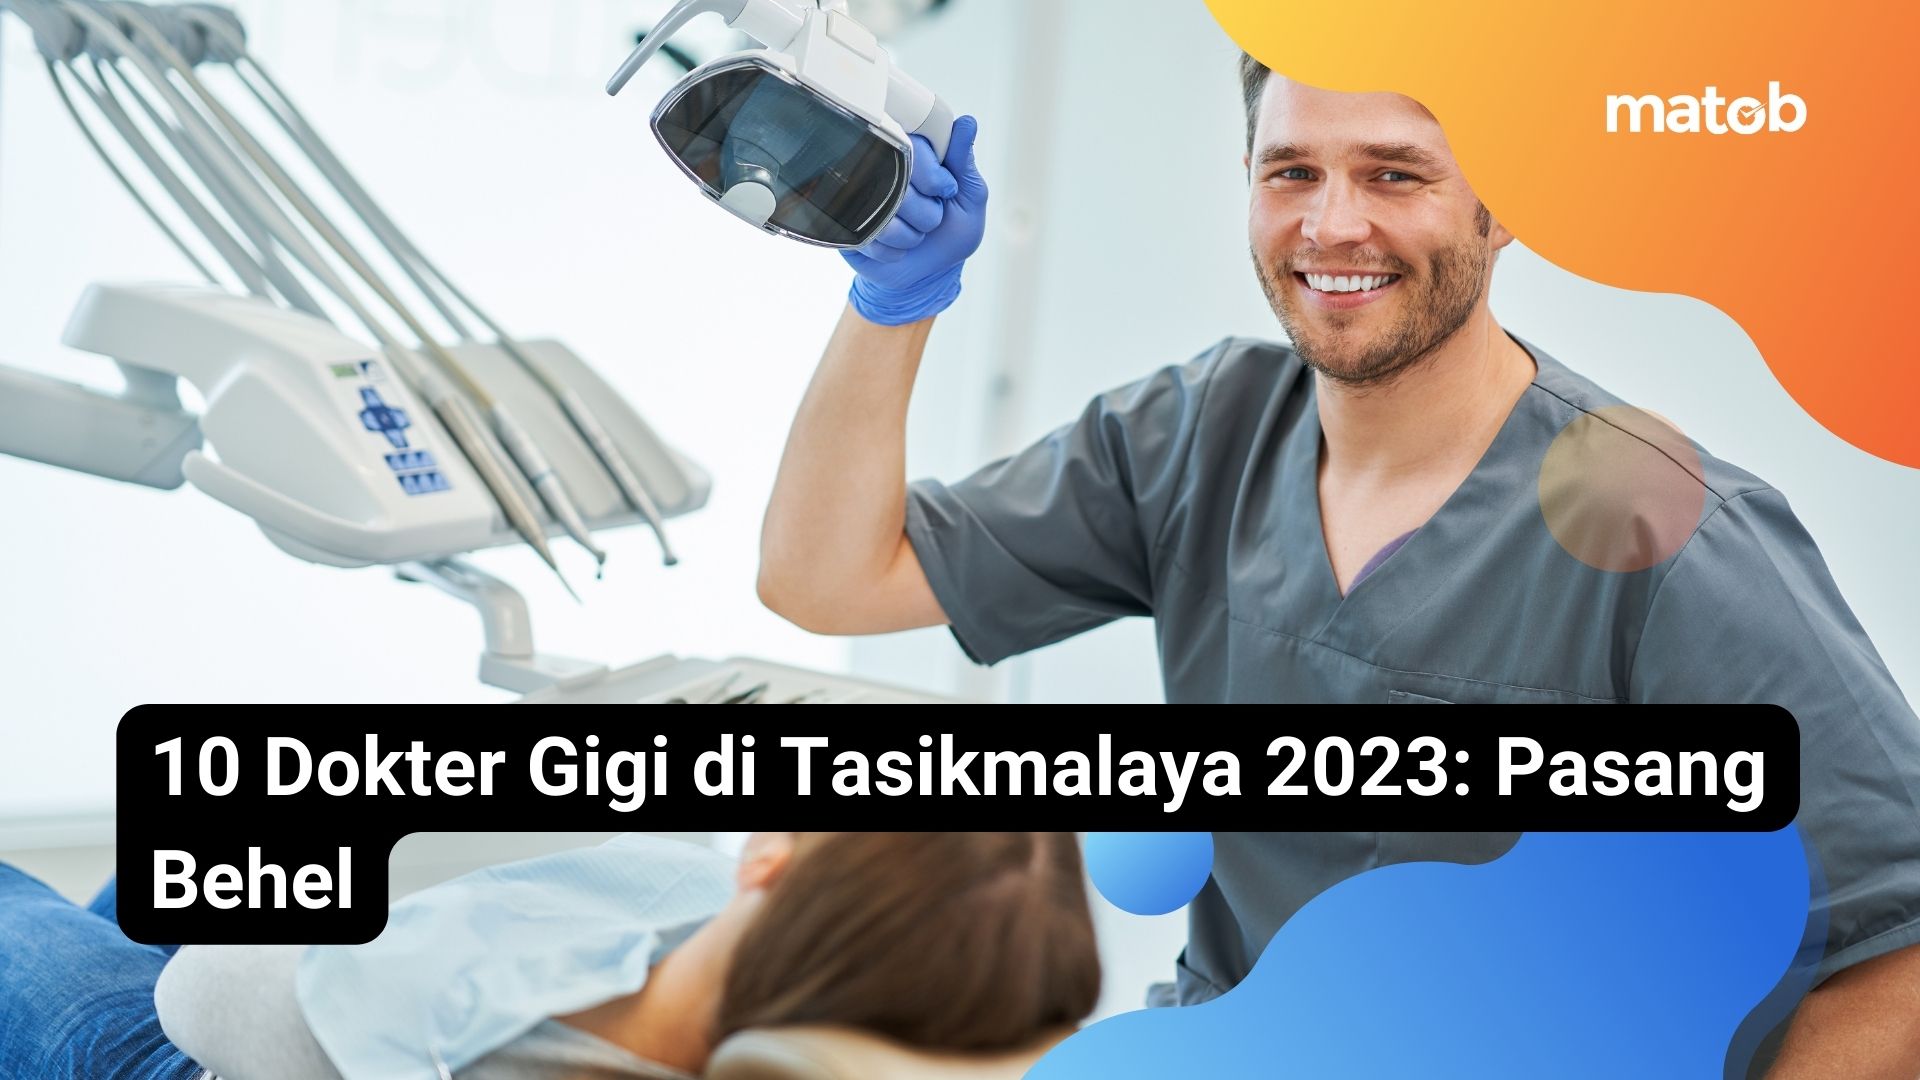 10 Dokter Gigi di Tasikmalaya 2023: Pasang Behel